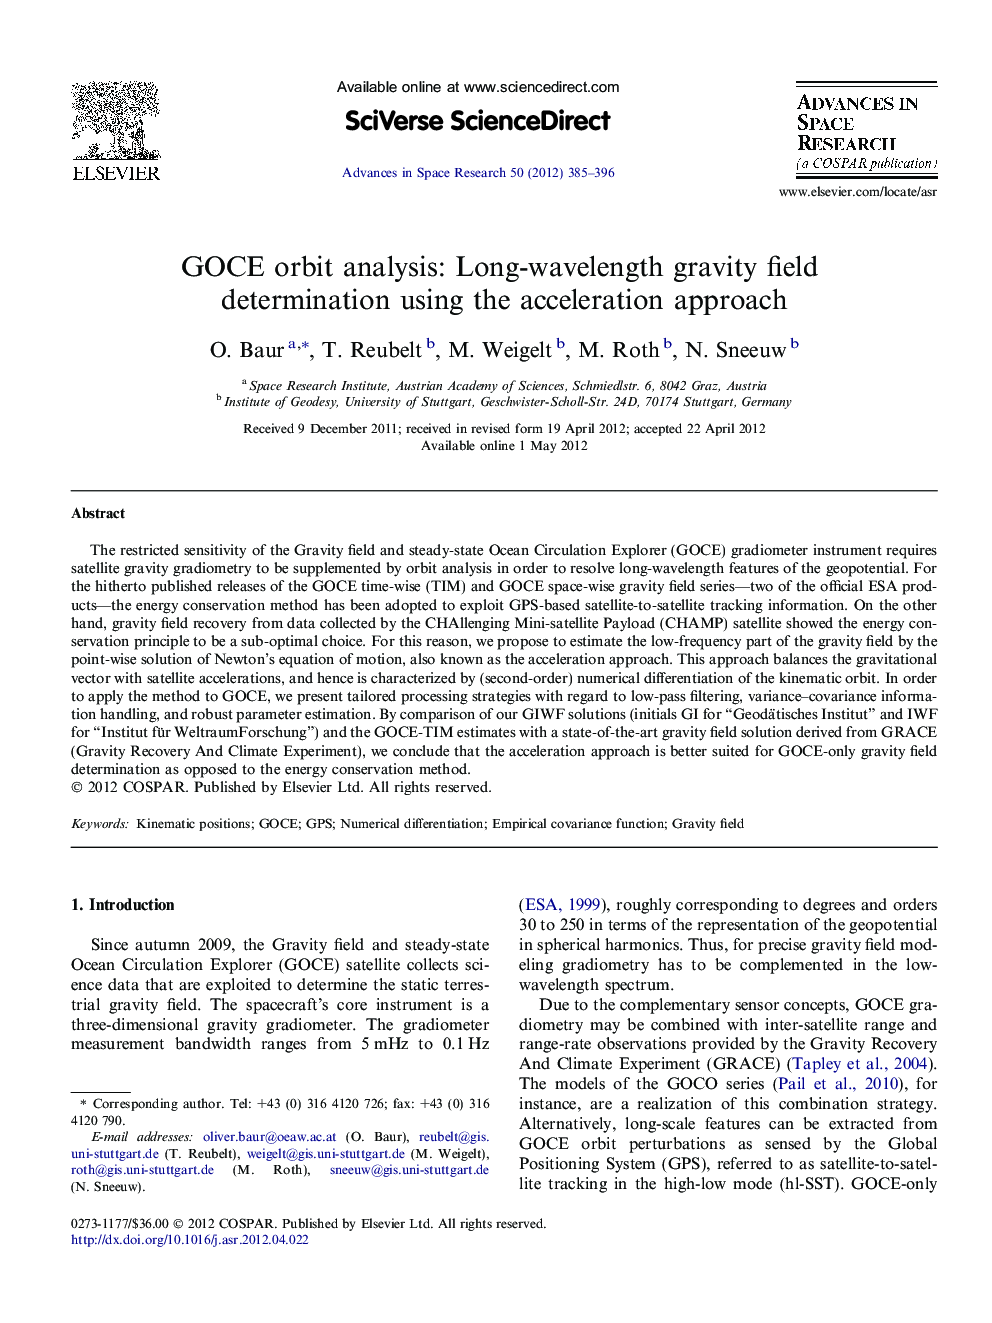 GOCE orbit analysis: Long-wavelength gravity field determination using the acceleration approach